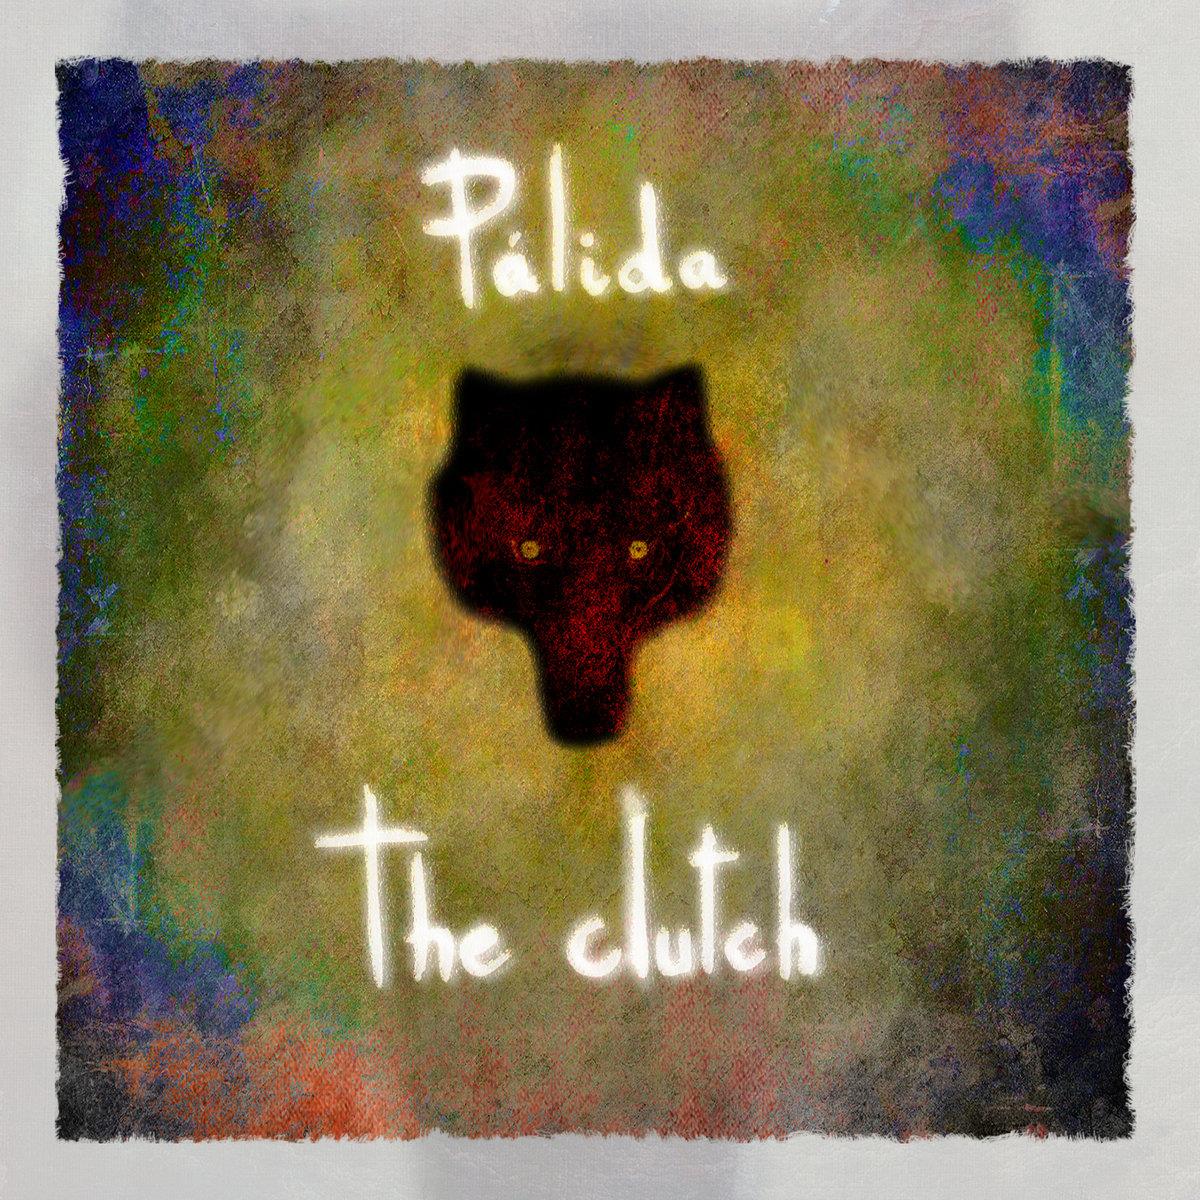 The Clutch